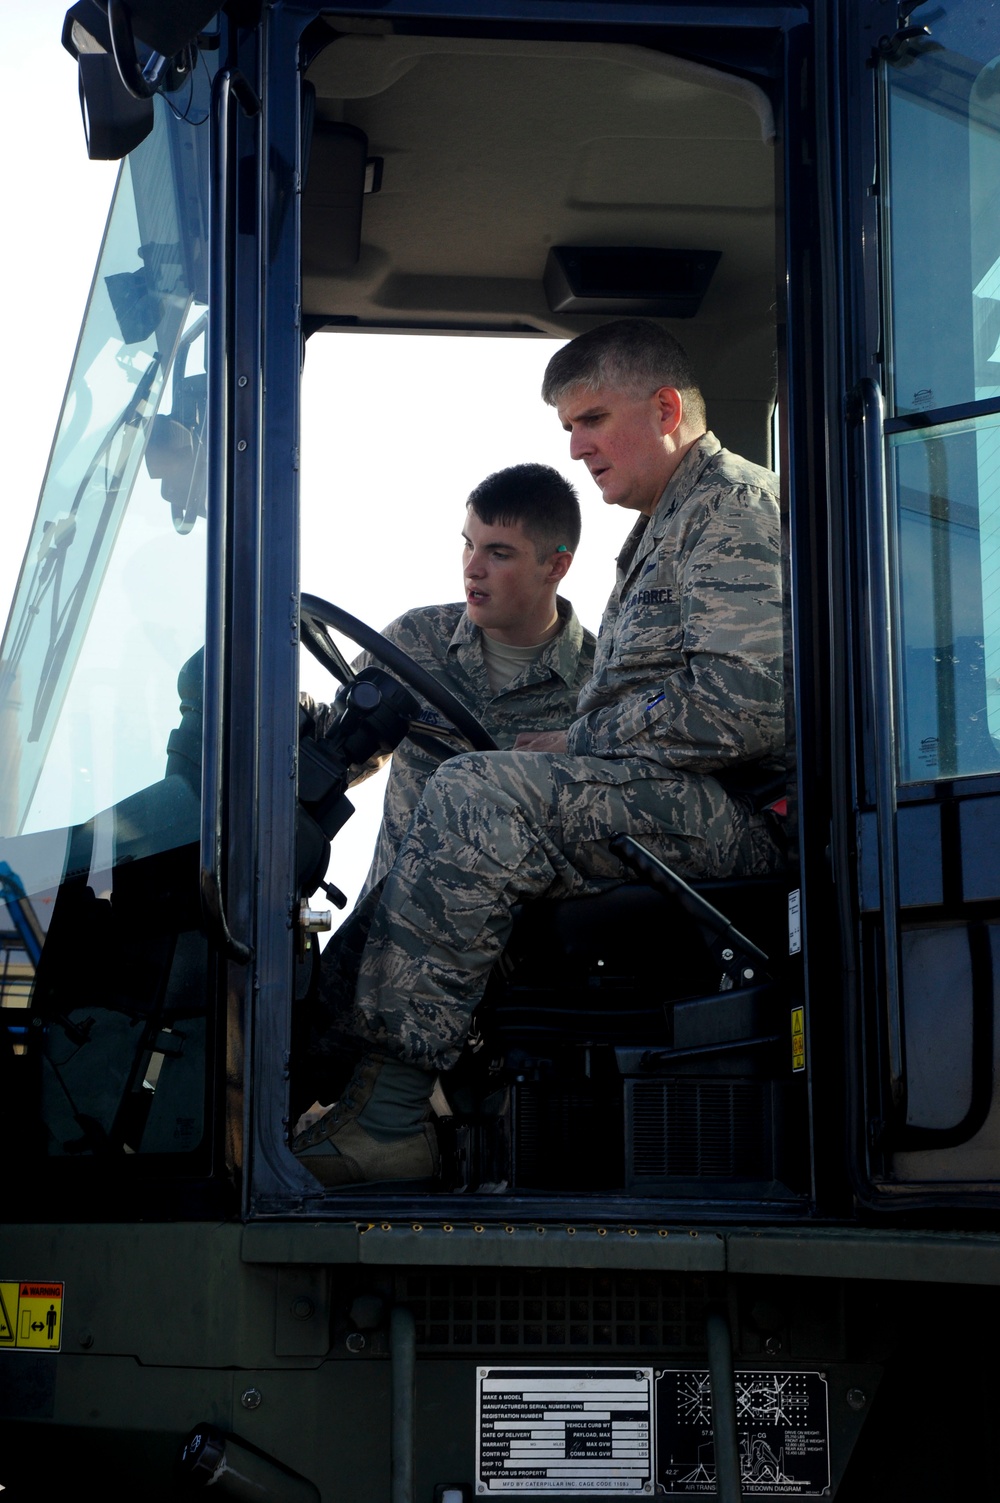 Wing commander visits vehicle operations flight